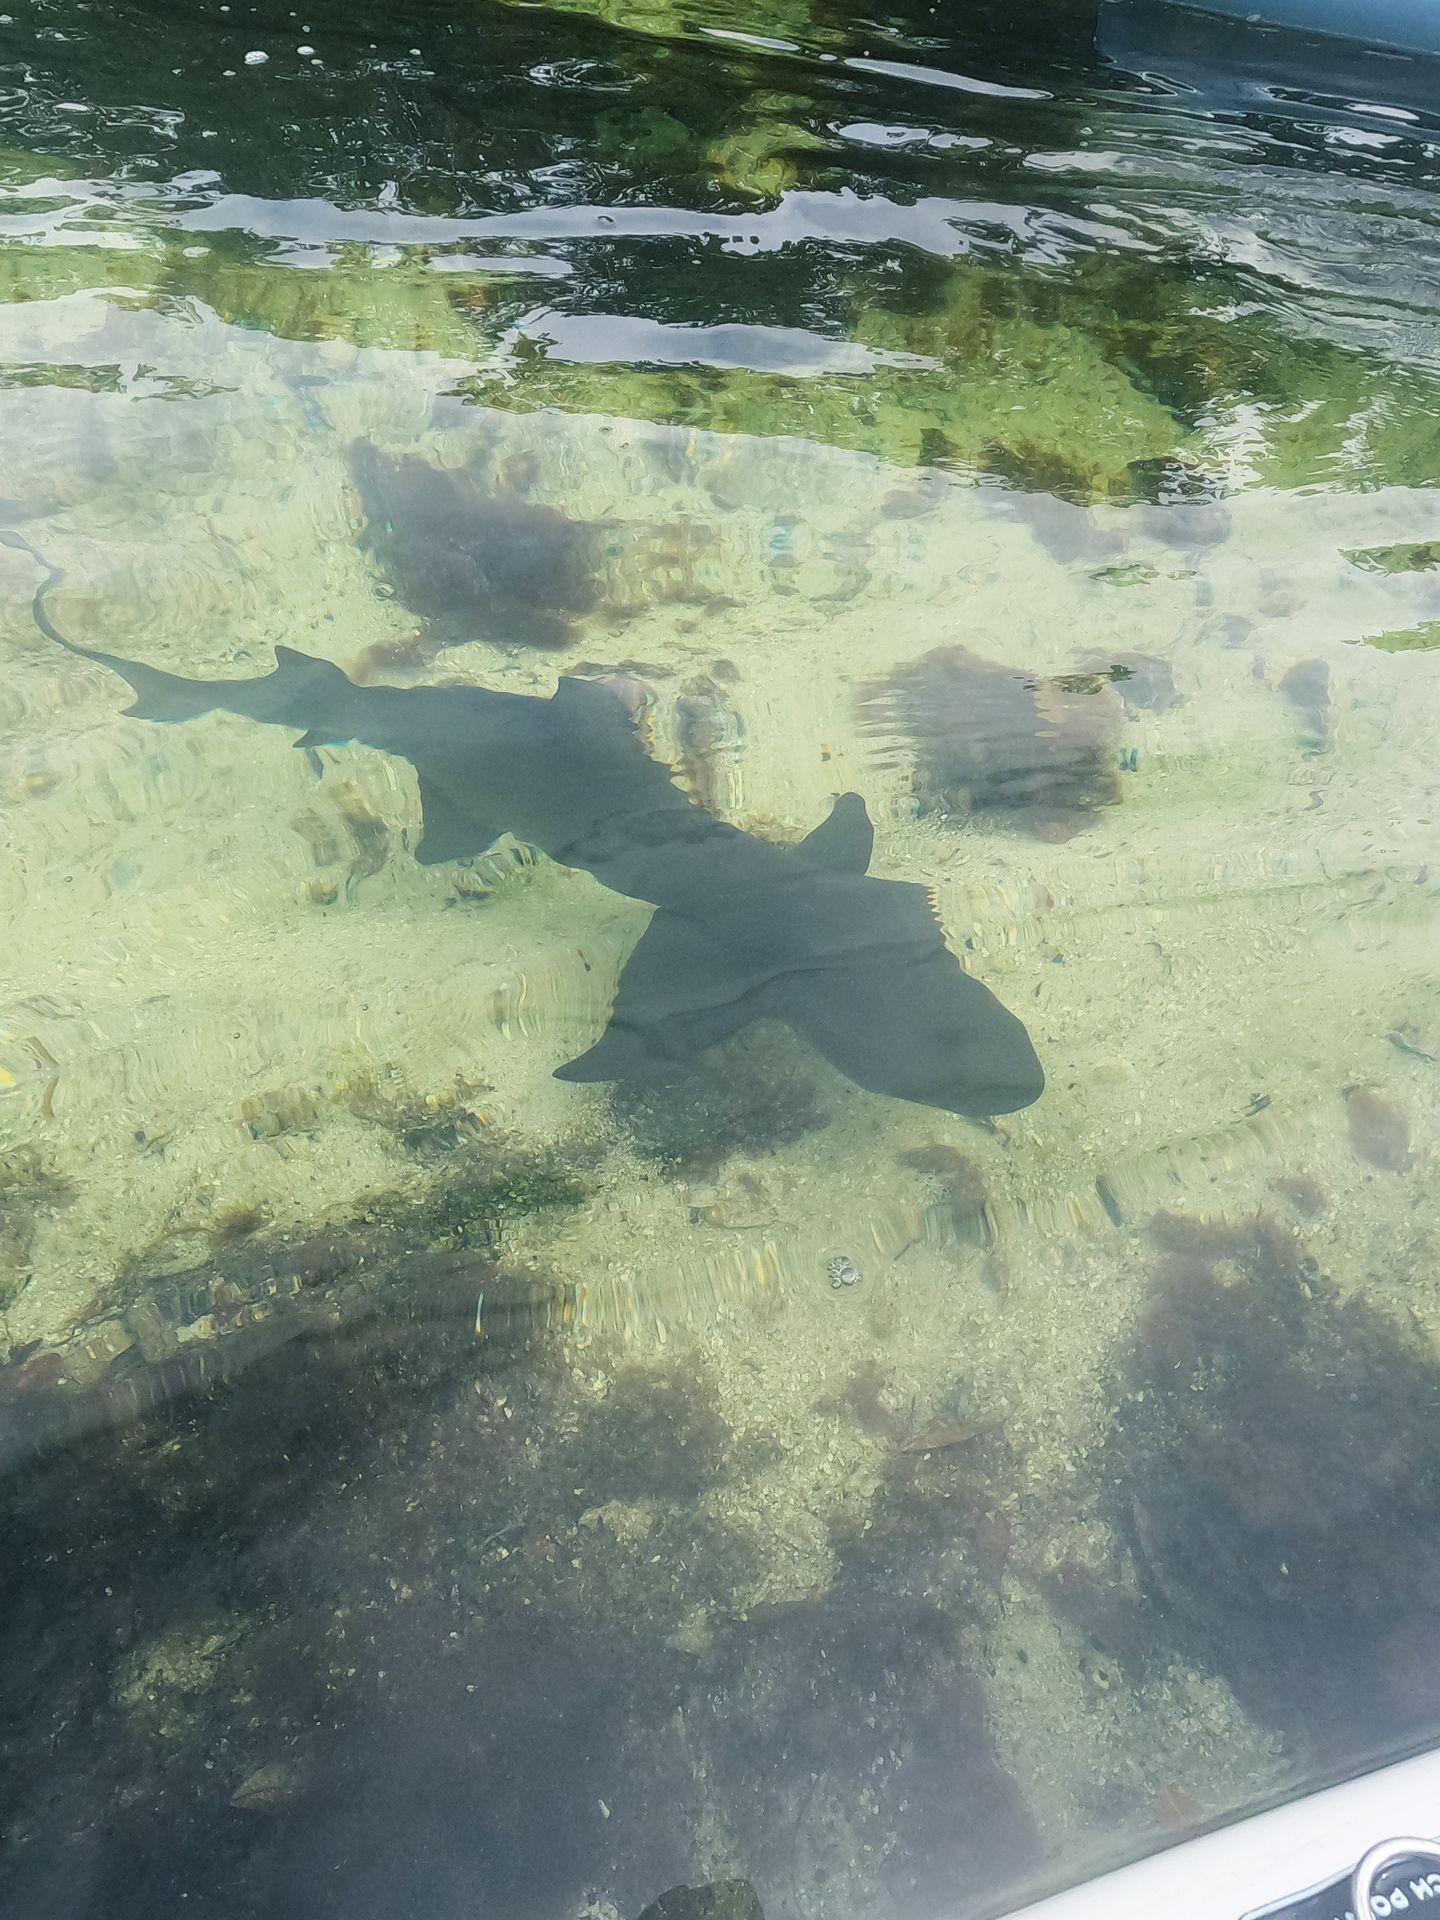 A nurse shark in the shallow water of Jones Lagoon